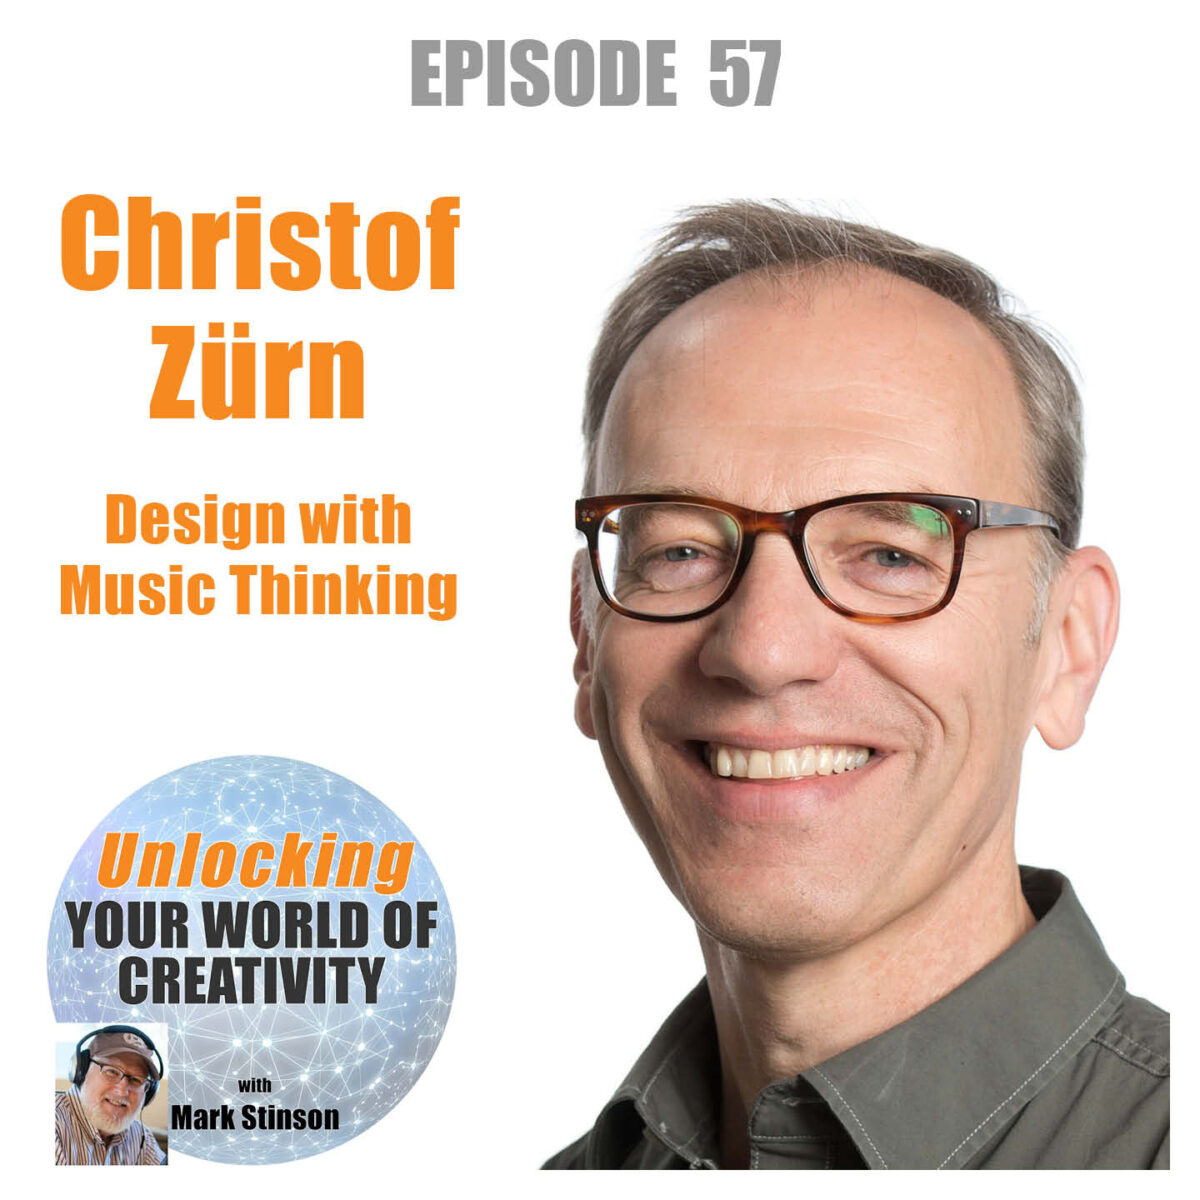 Design with Music Thinking Christof Zürn on Unlocking your world of creativity podcast